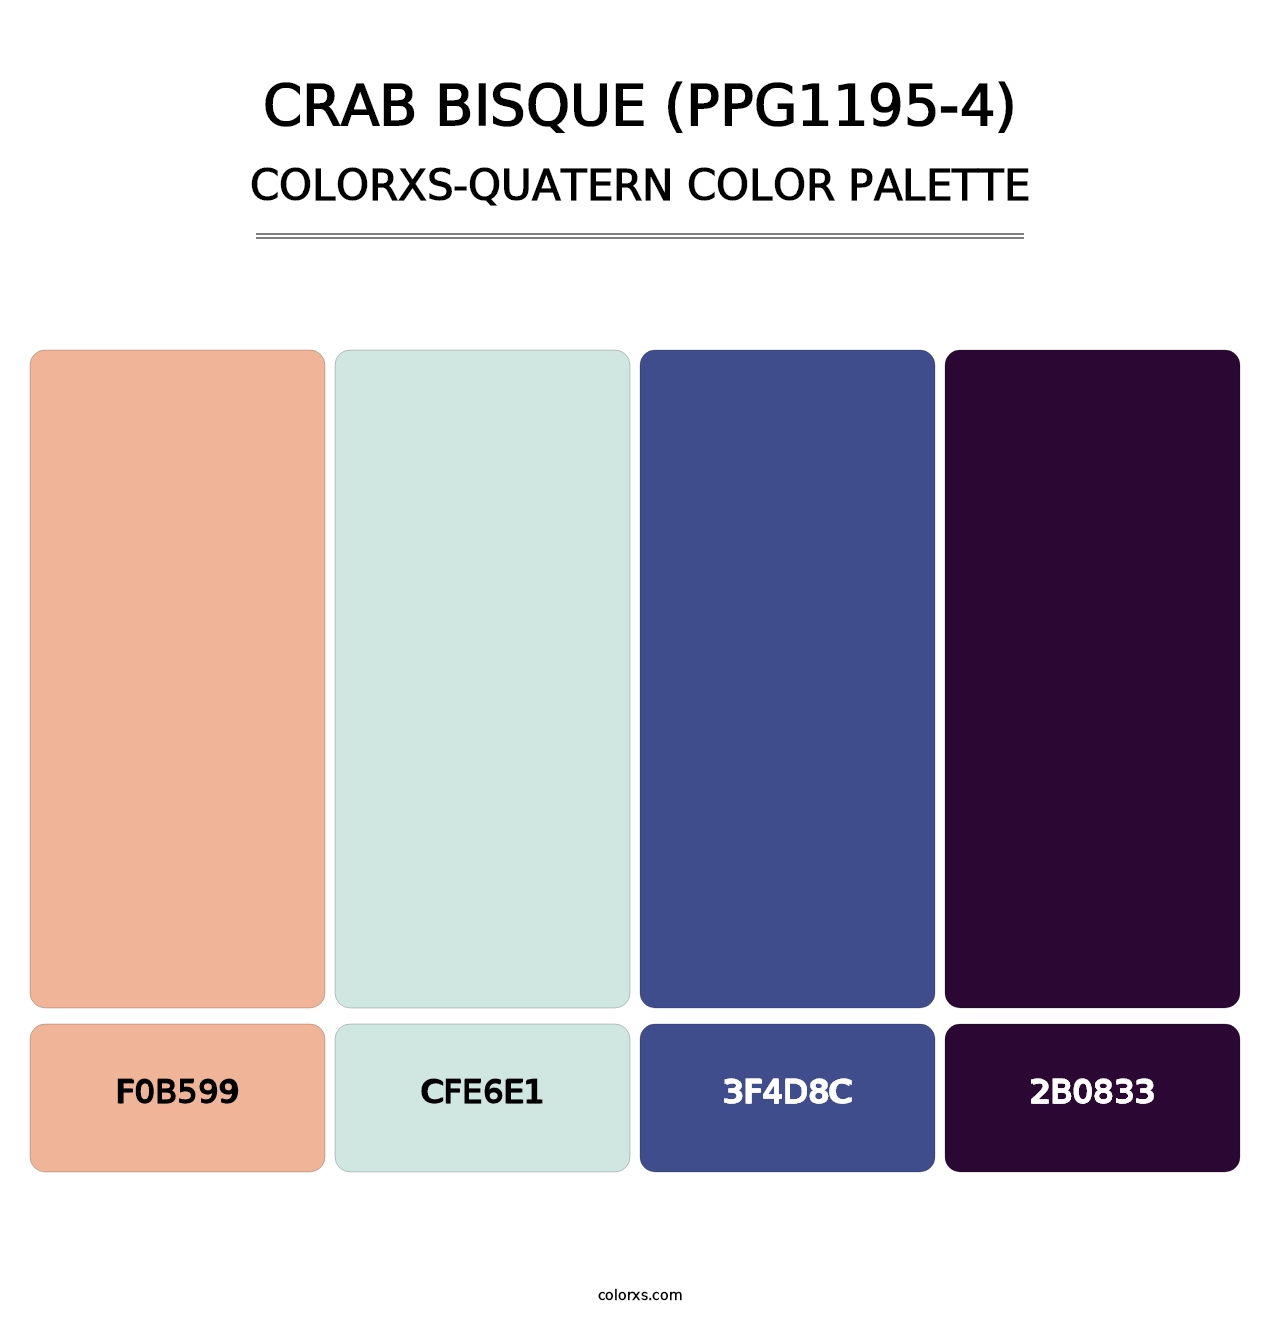 Crab Bisque (PPG1195-4) - Colorxs Quatern Palette